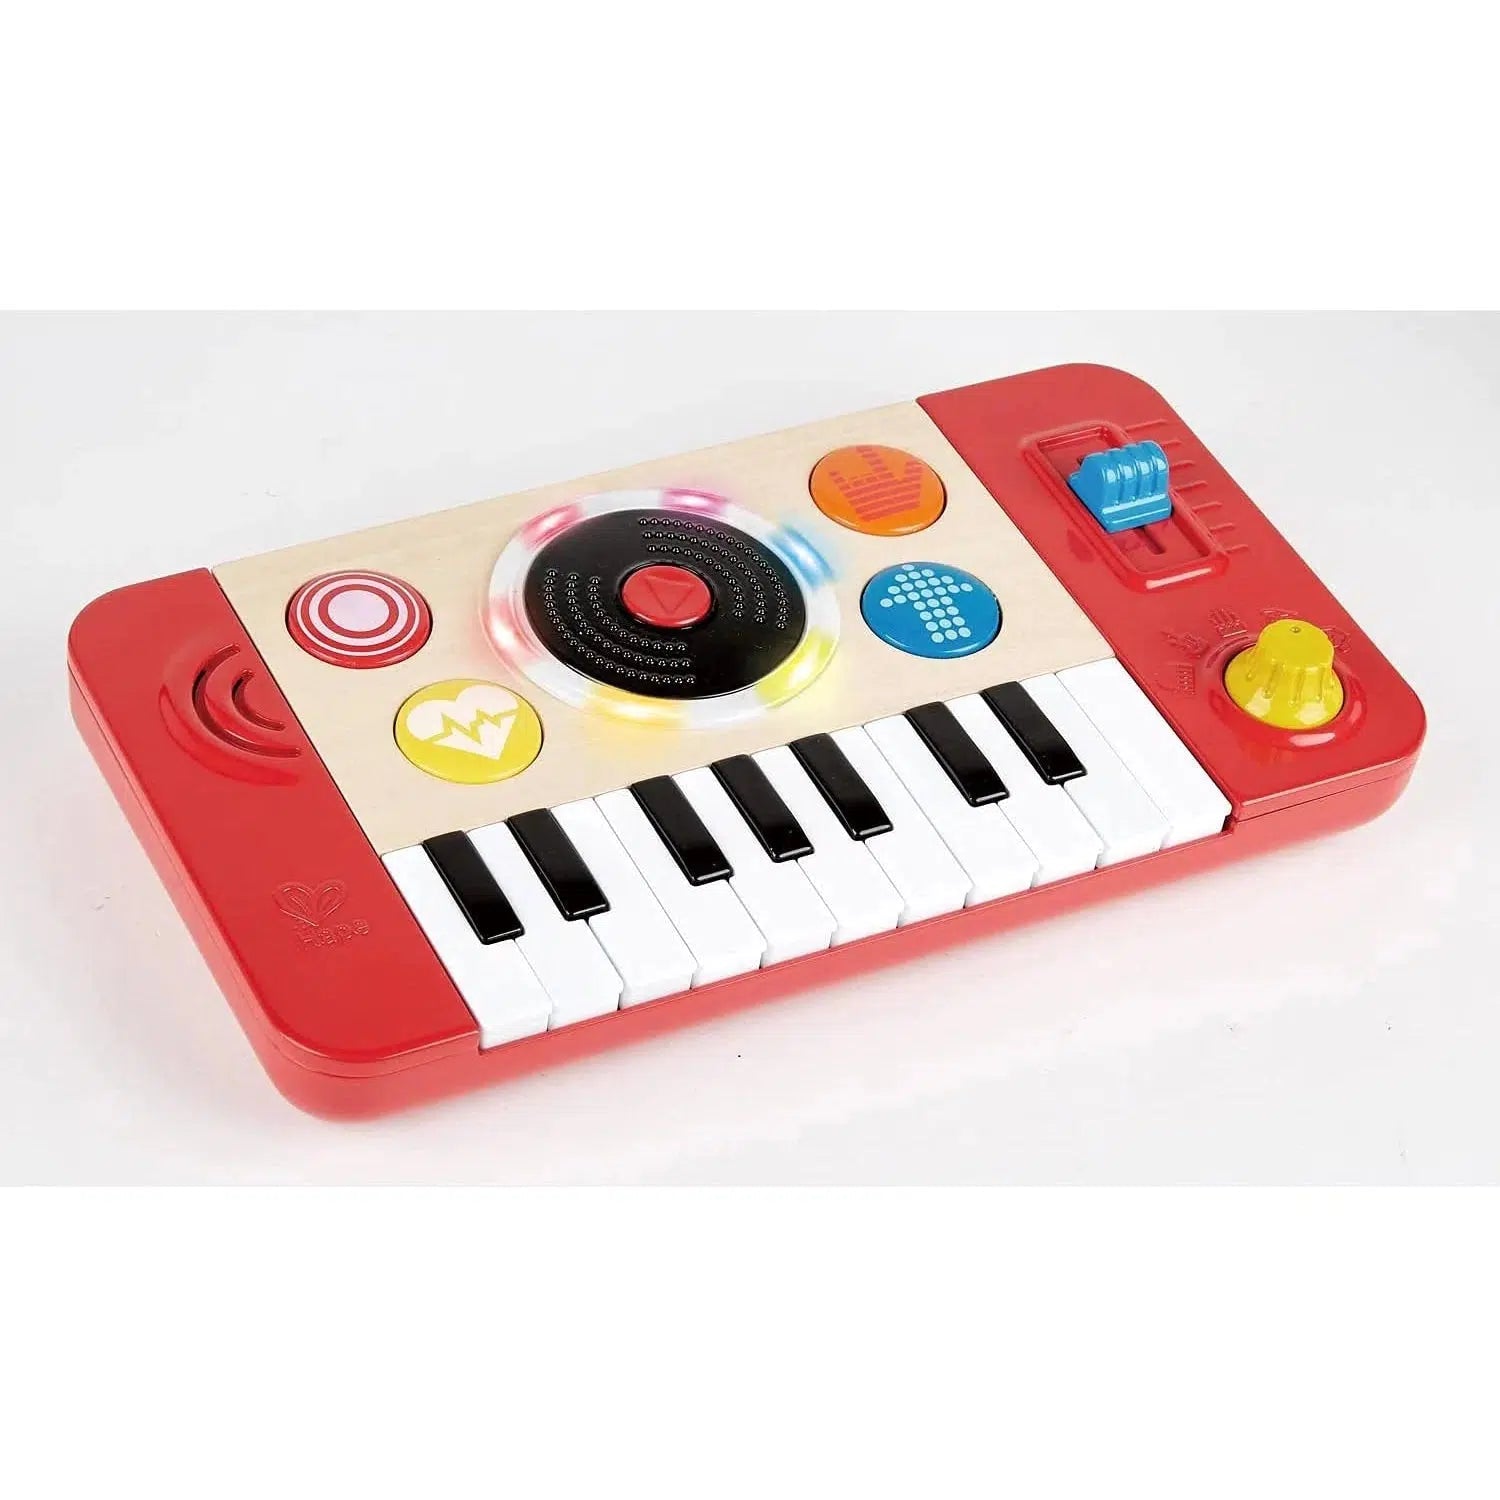 Hape-Hape DJ Mix & Spin Studio Musical Toy-E0621F-Legacy Toys